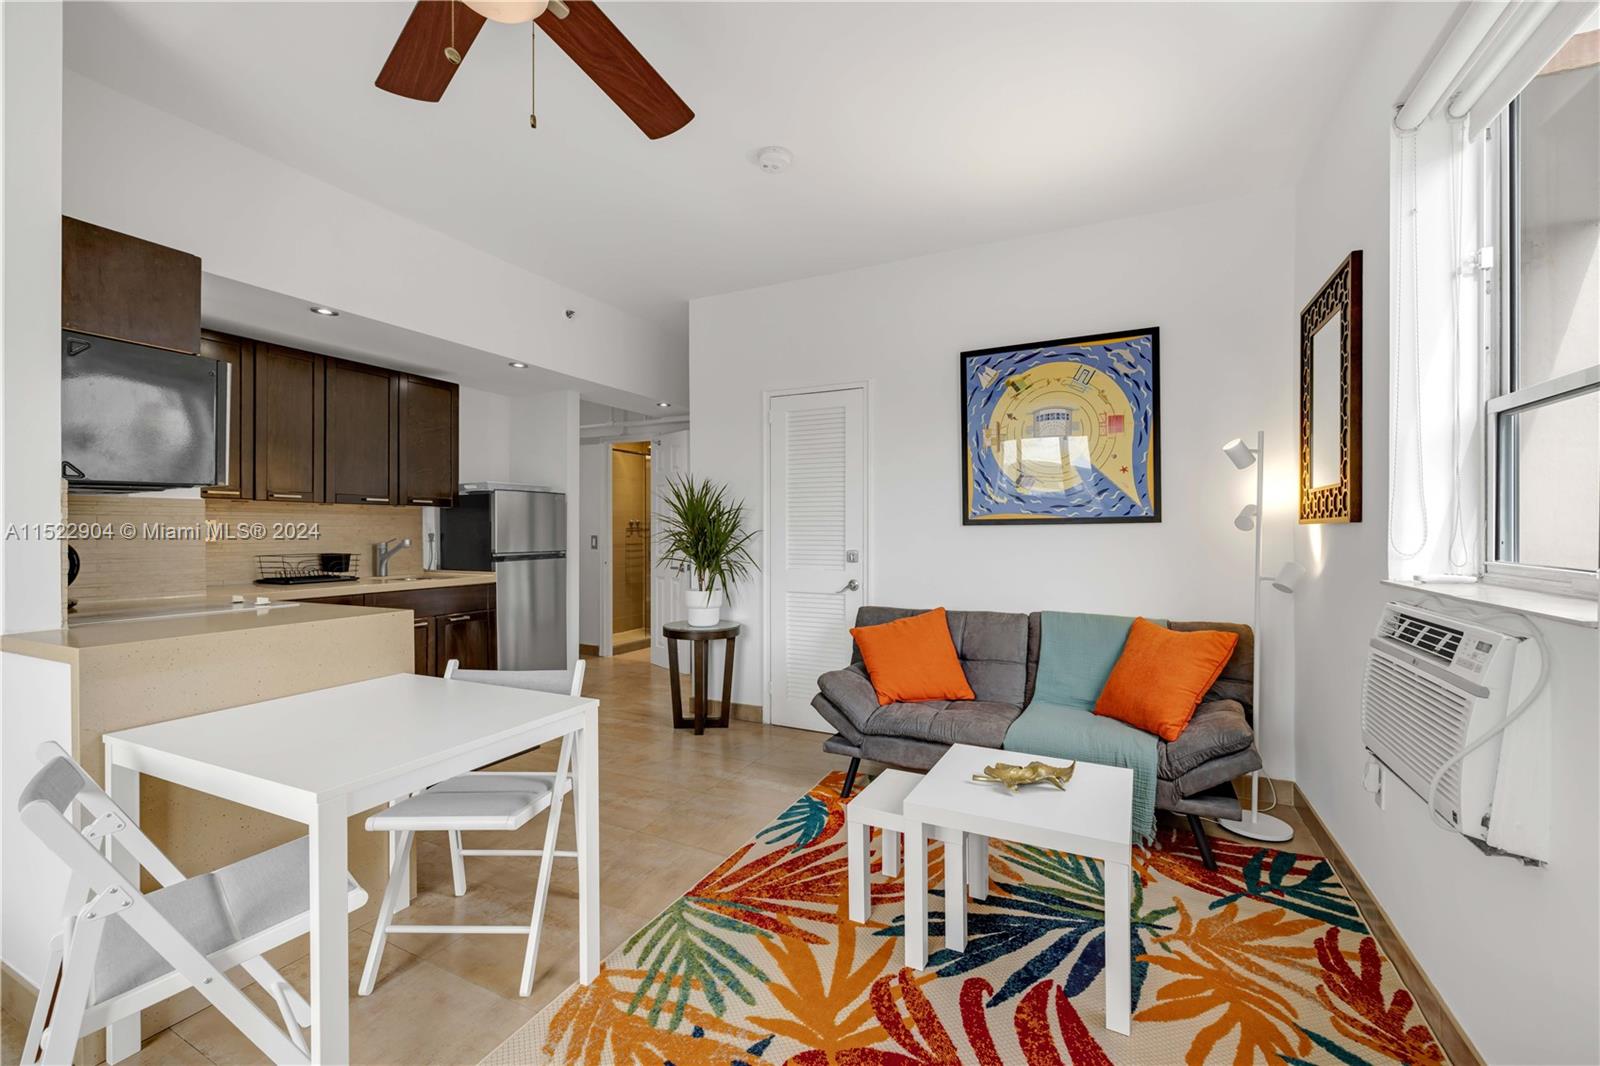 Rental Property at 255 W 24th St St 542, Miami Beach, Miami-Dade County, Florida - Bathrooms: 1  - $1,975 MO.